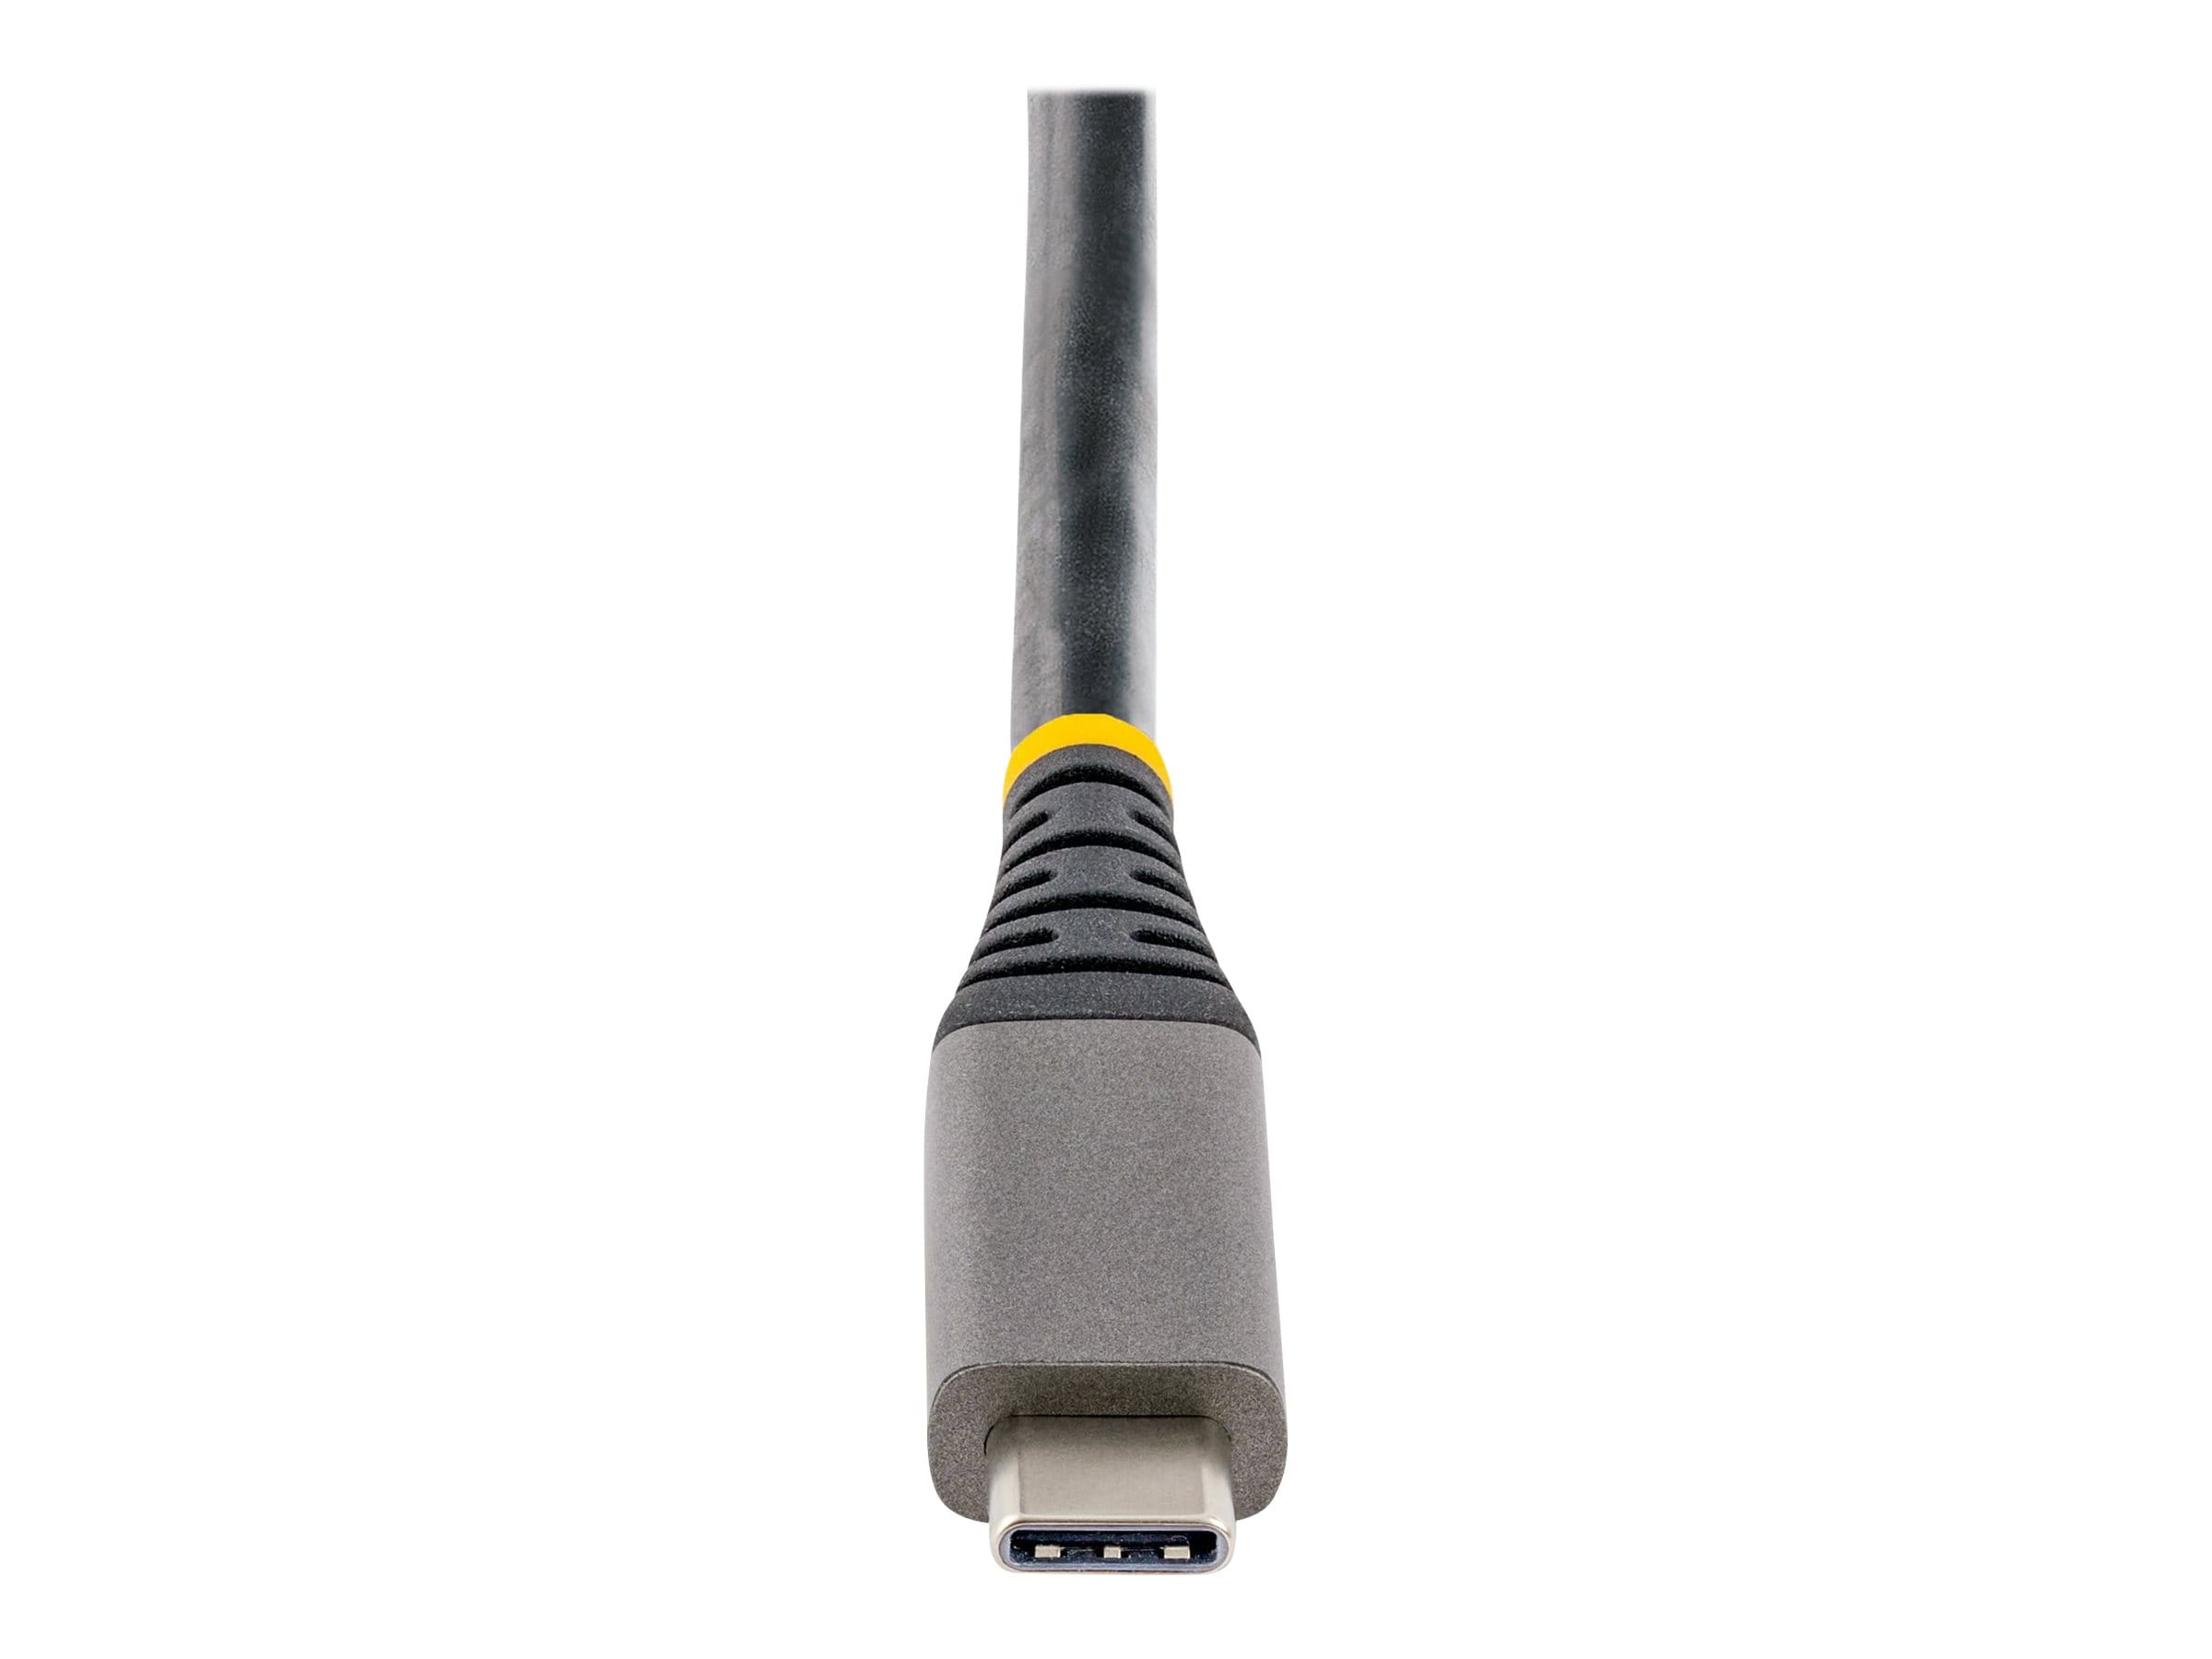 StarTech.com USB-C Multiport Adapter, 4K 60Hz HDMI 2.0b, HDR, USB 3.2 Gen 2 10Gbps Hub (2xUSB-C, 1xUSB-A)